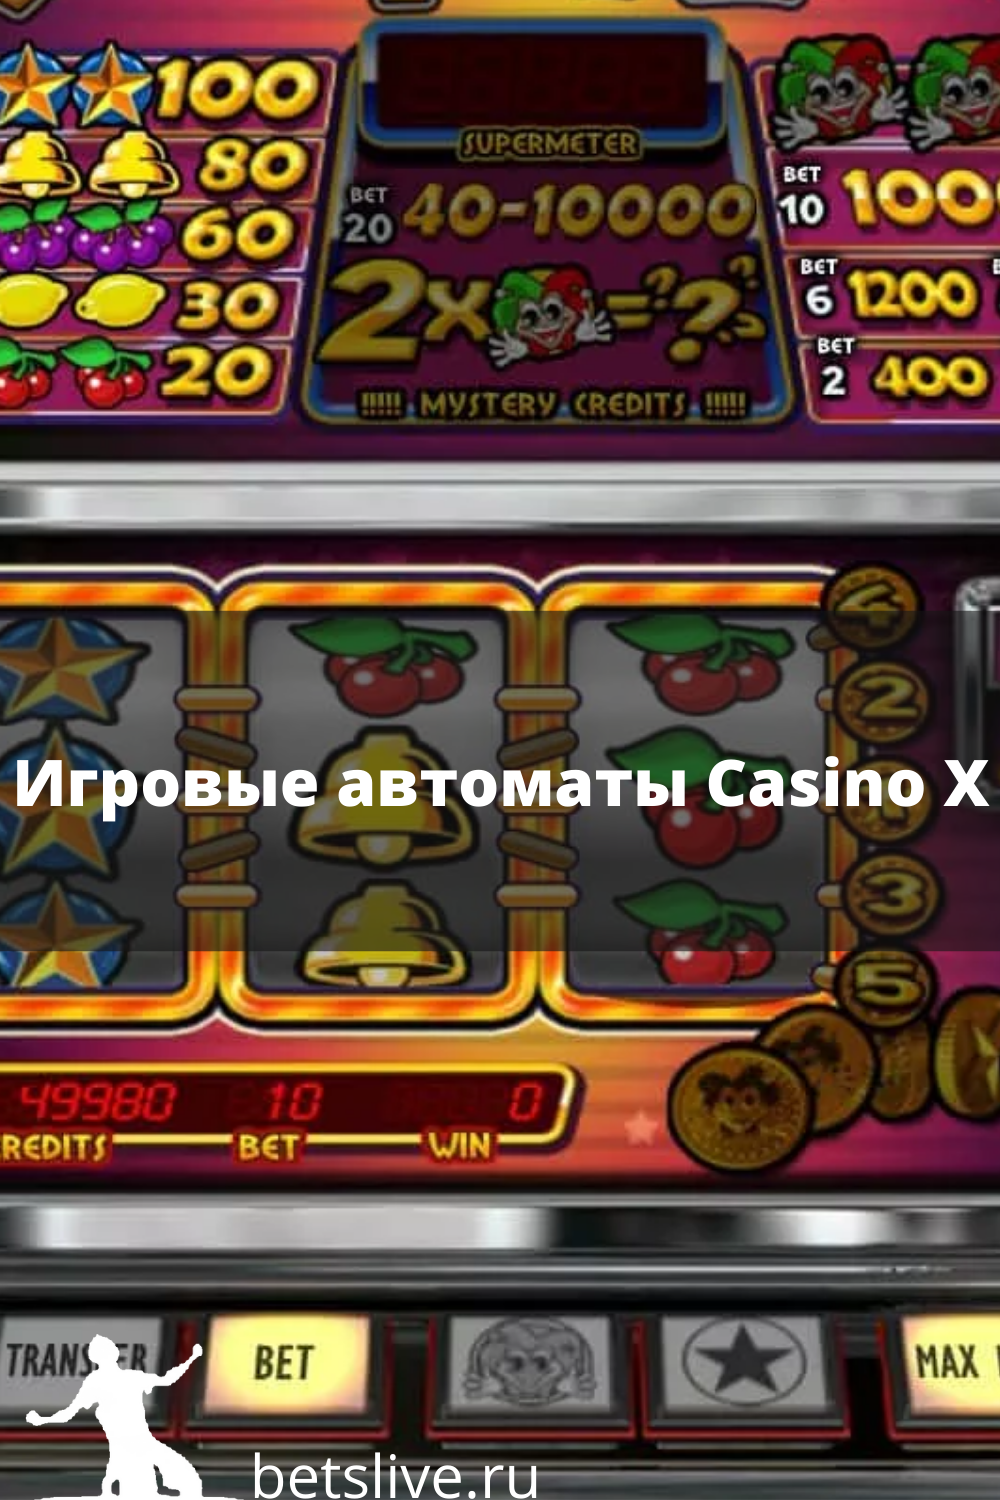 Casino x бонус код касинокс13 ru. Игровой автомат казино. Игровые автоматы казино Икс. Игровые автоматы 2000 годов. Спортбет игровые автоматы.